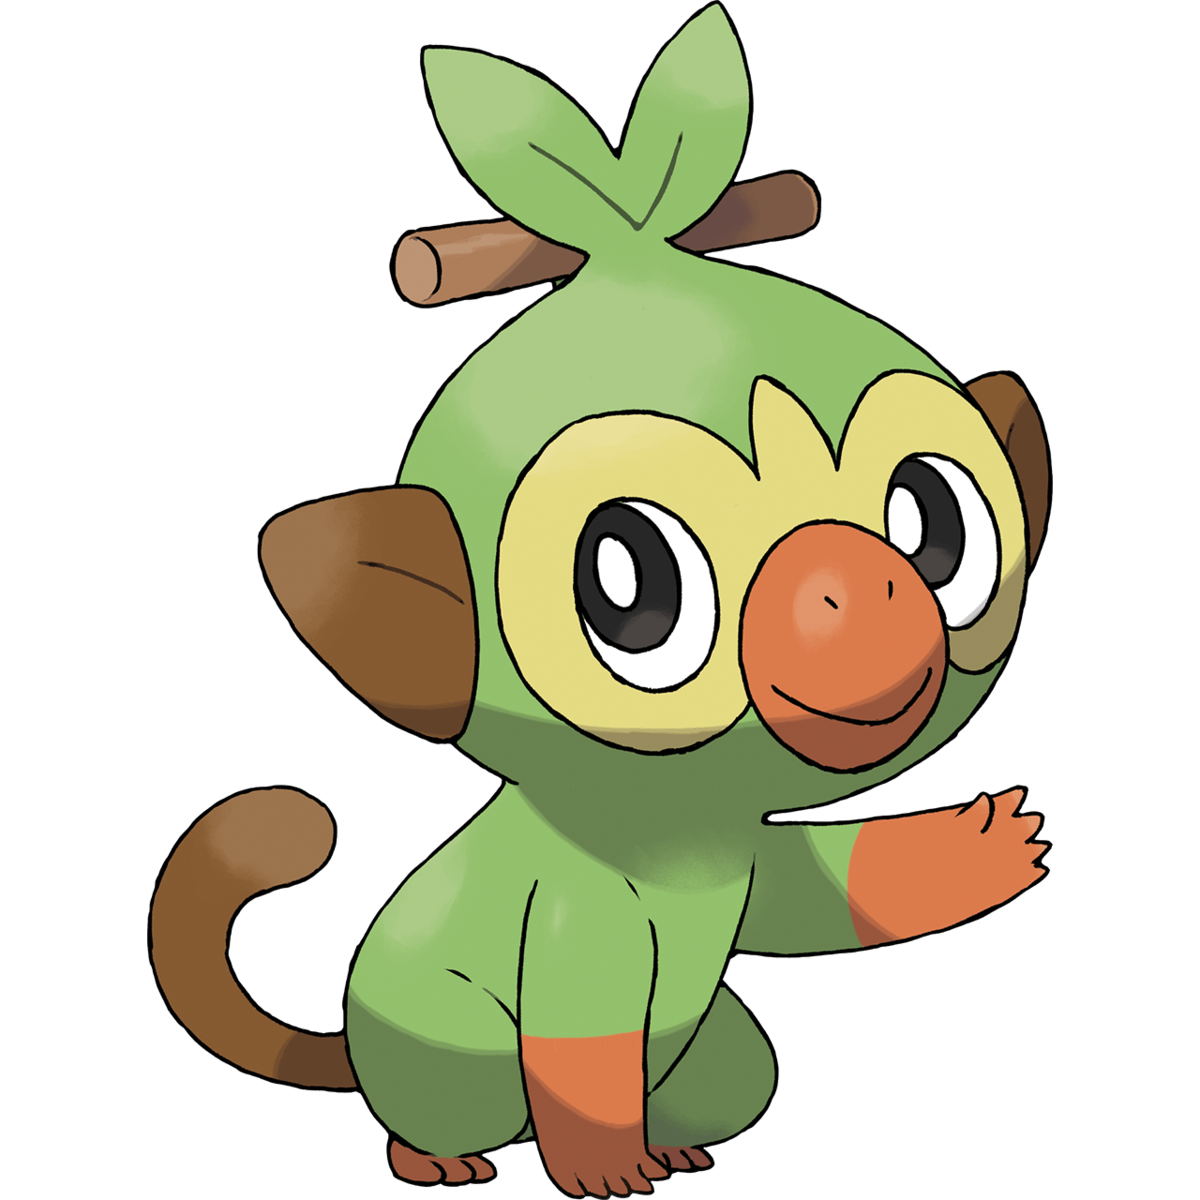 Grookey (Pokémon), The Community Driven Pokémon